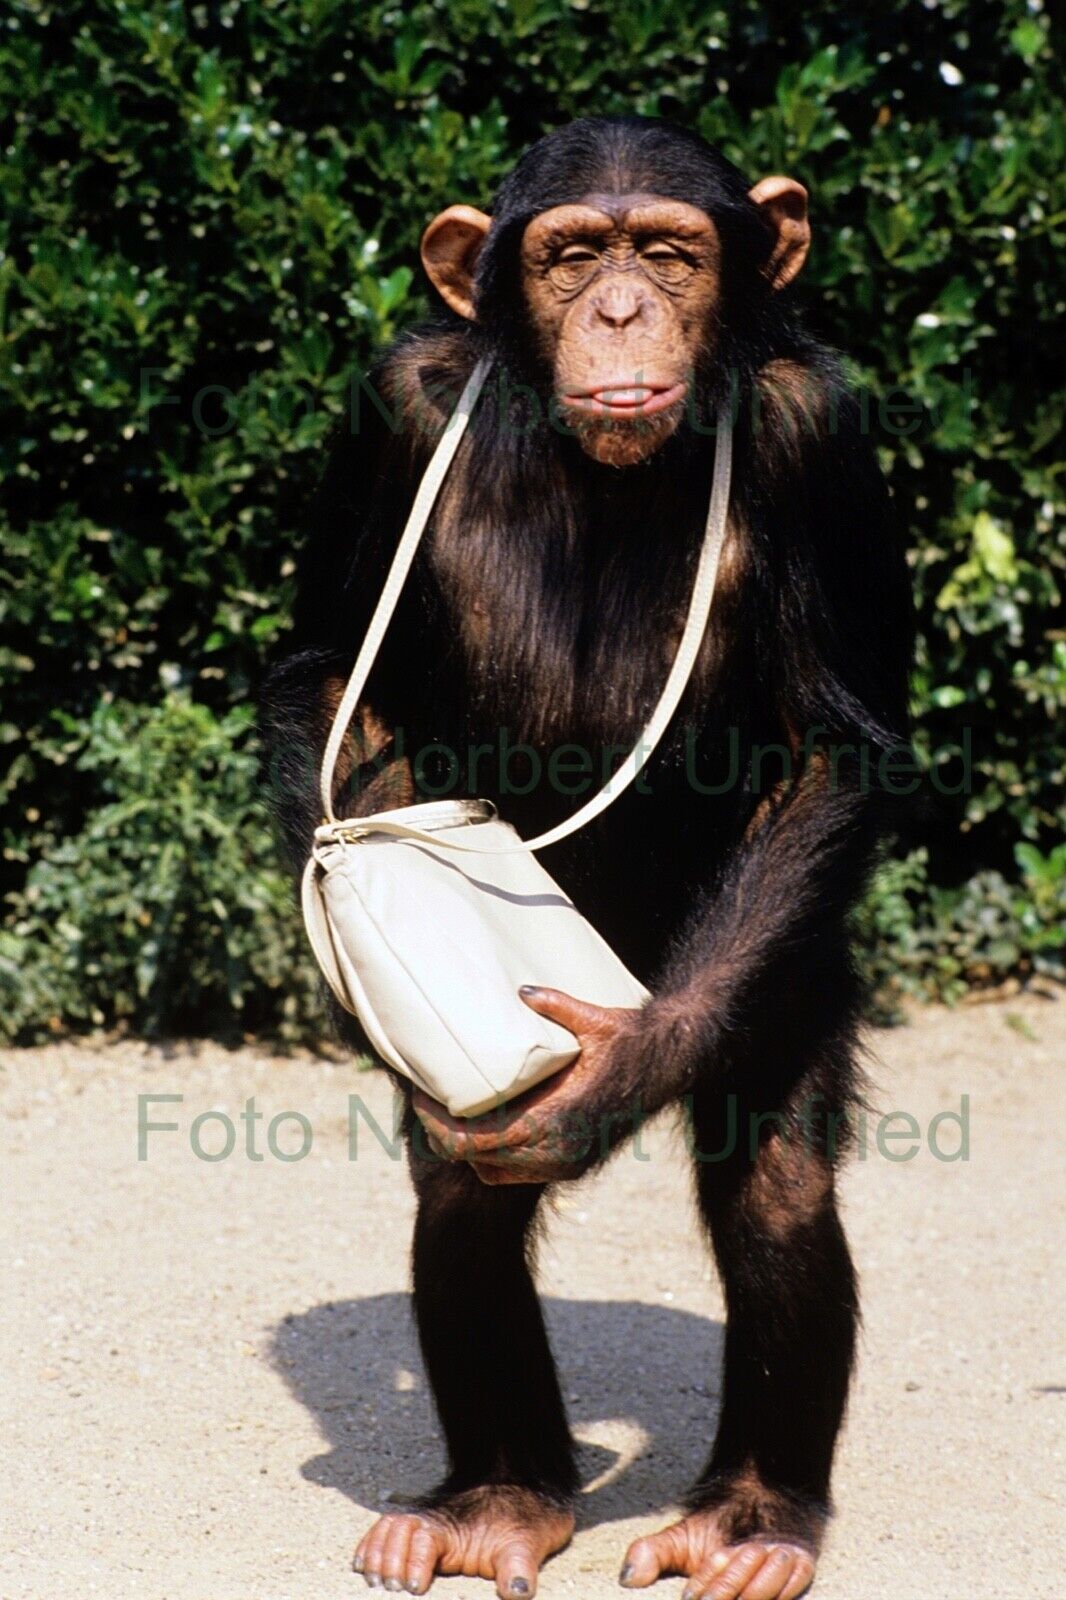 Animal Park Hagenbeck - Chimpanzee 10 X 15 CM Photo Poster painting Without Autograph (Star-2